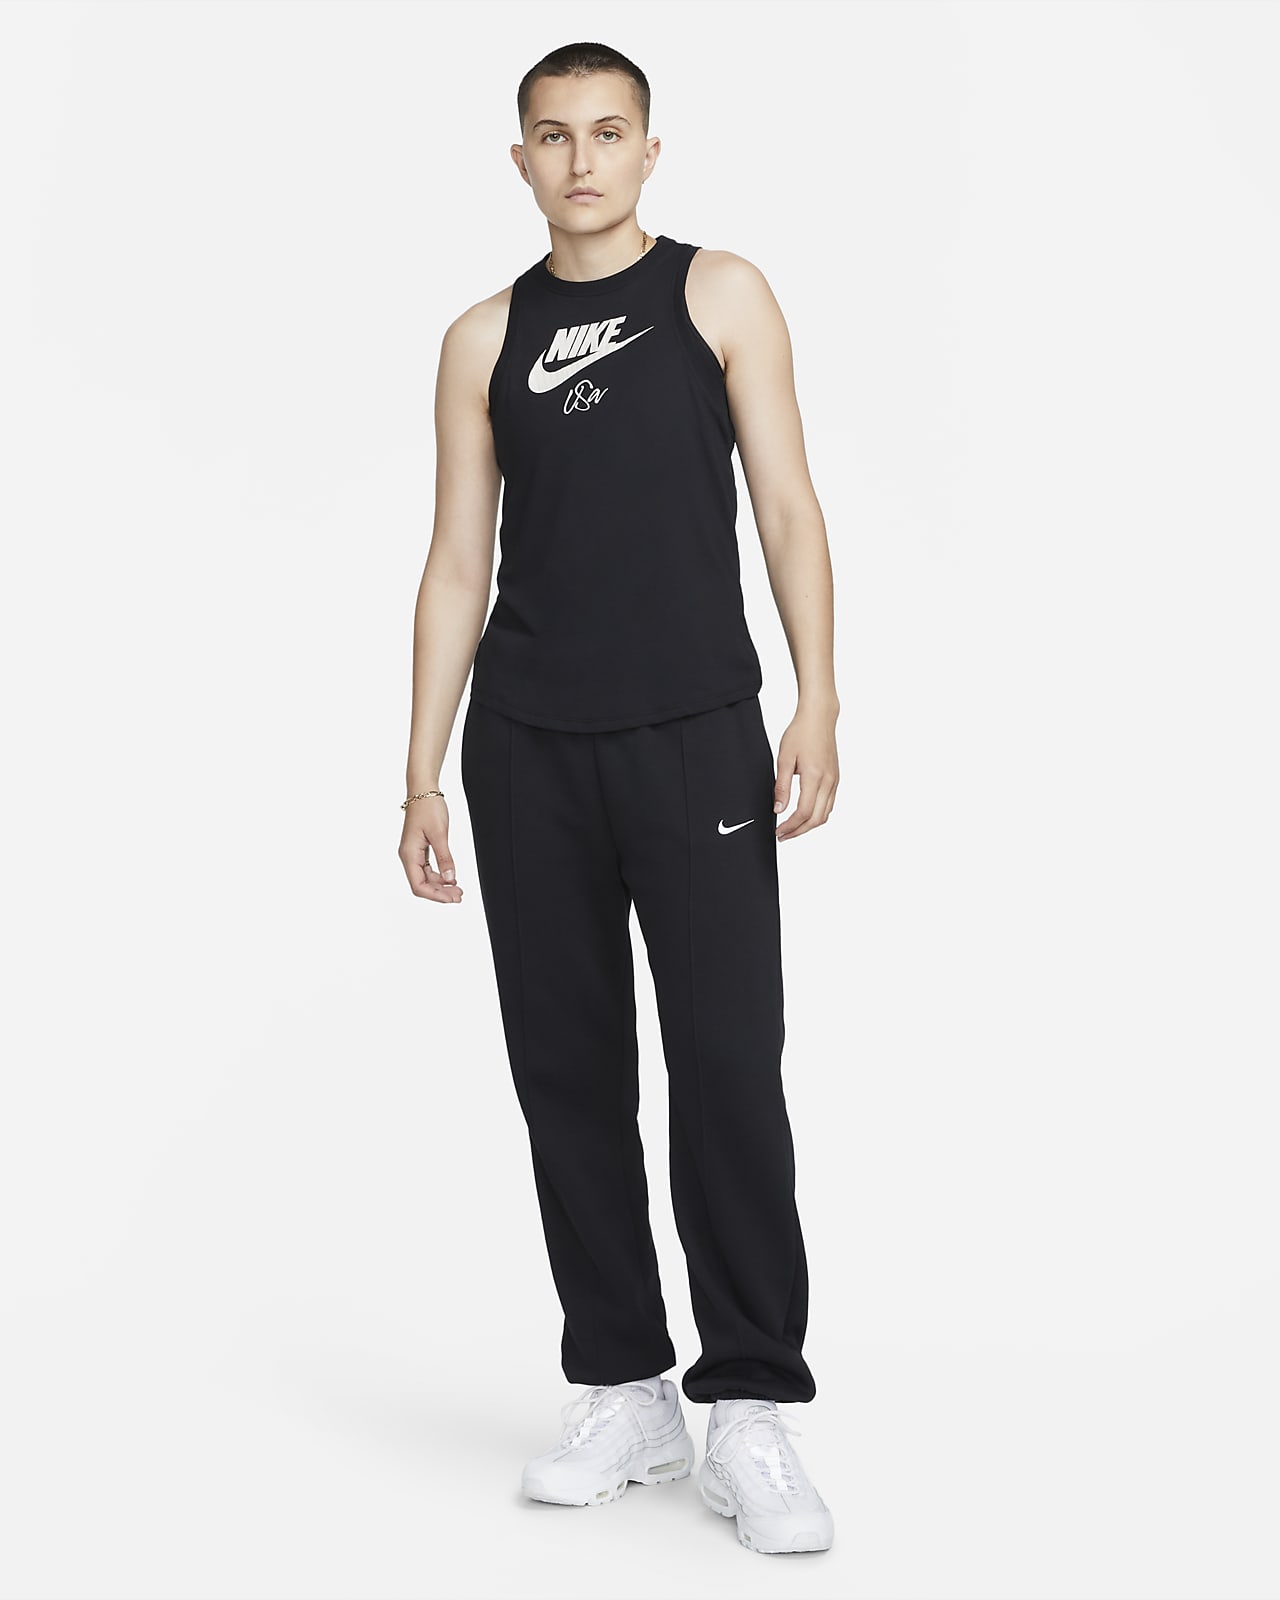 Nike Air Dri Fit Tank Top Womens Black, £10.00